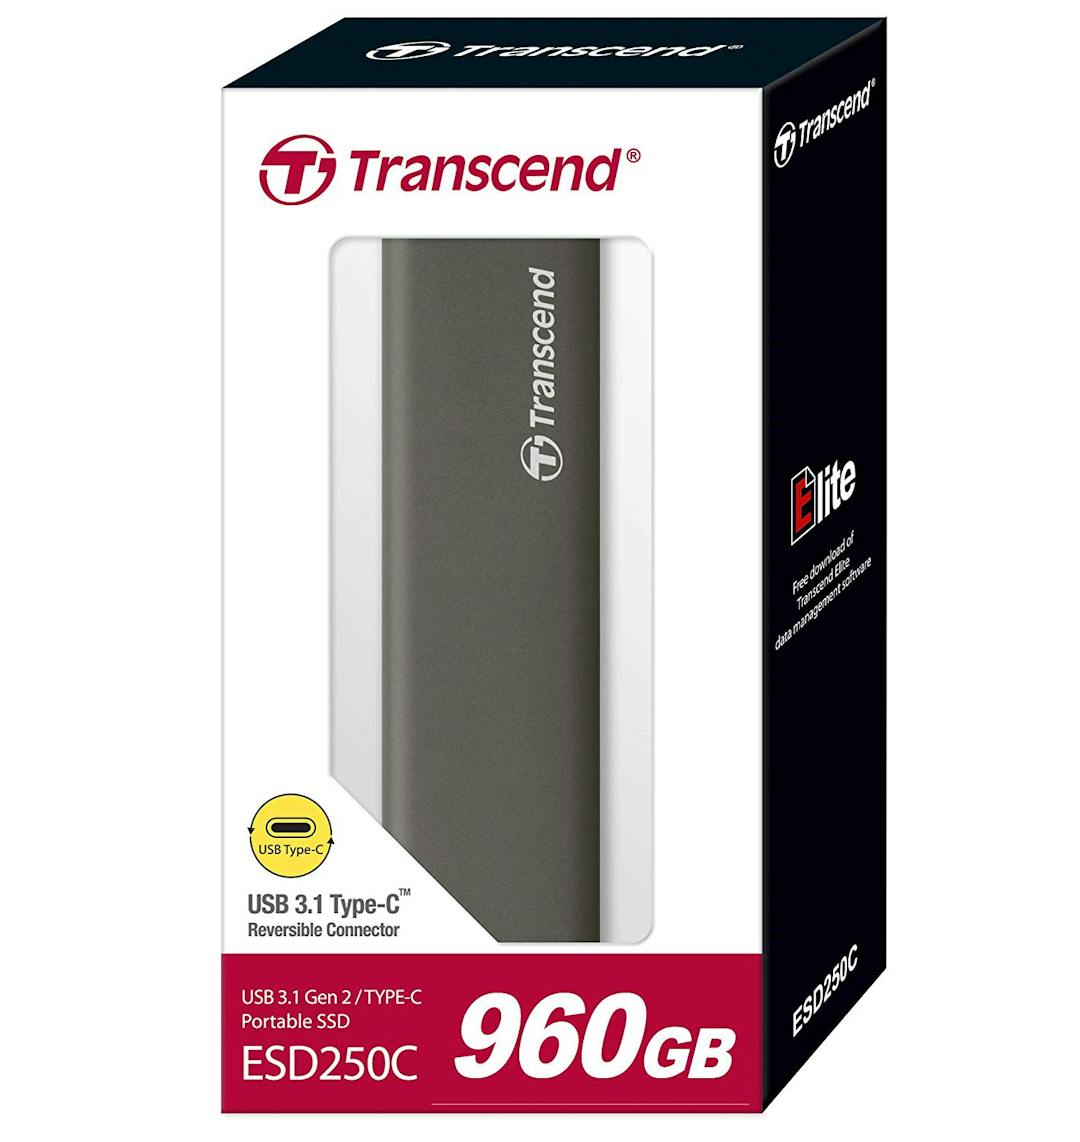 Transcend TS960GESD250C 960GB, USB 3.1 Gen 2, Type C